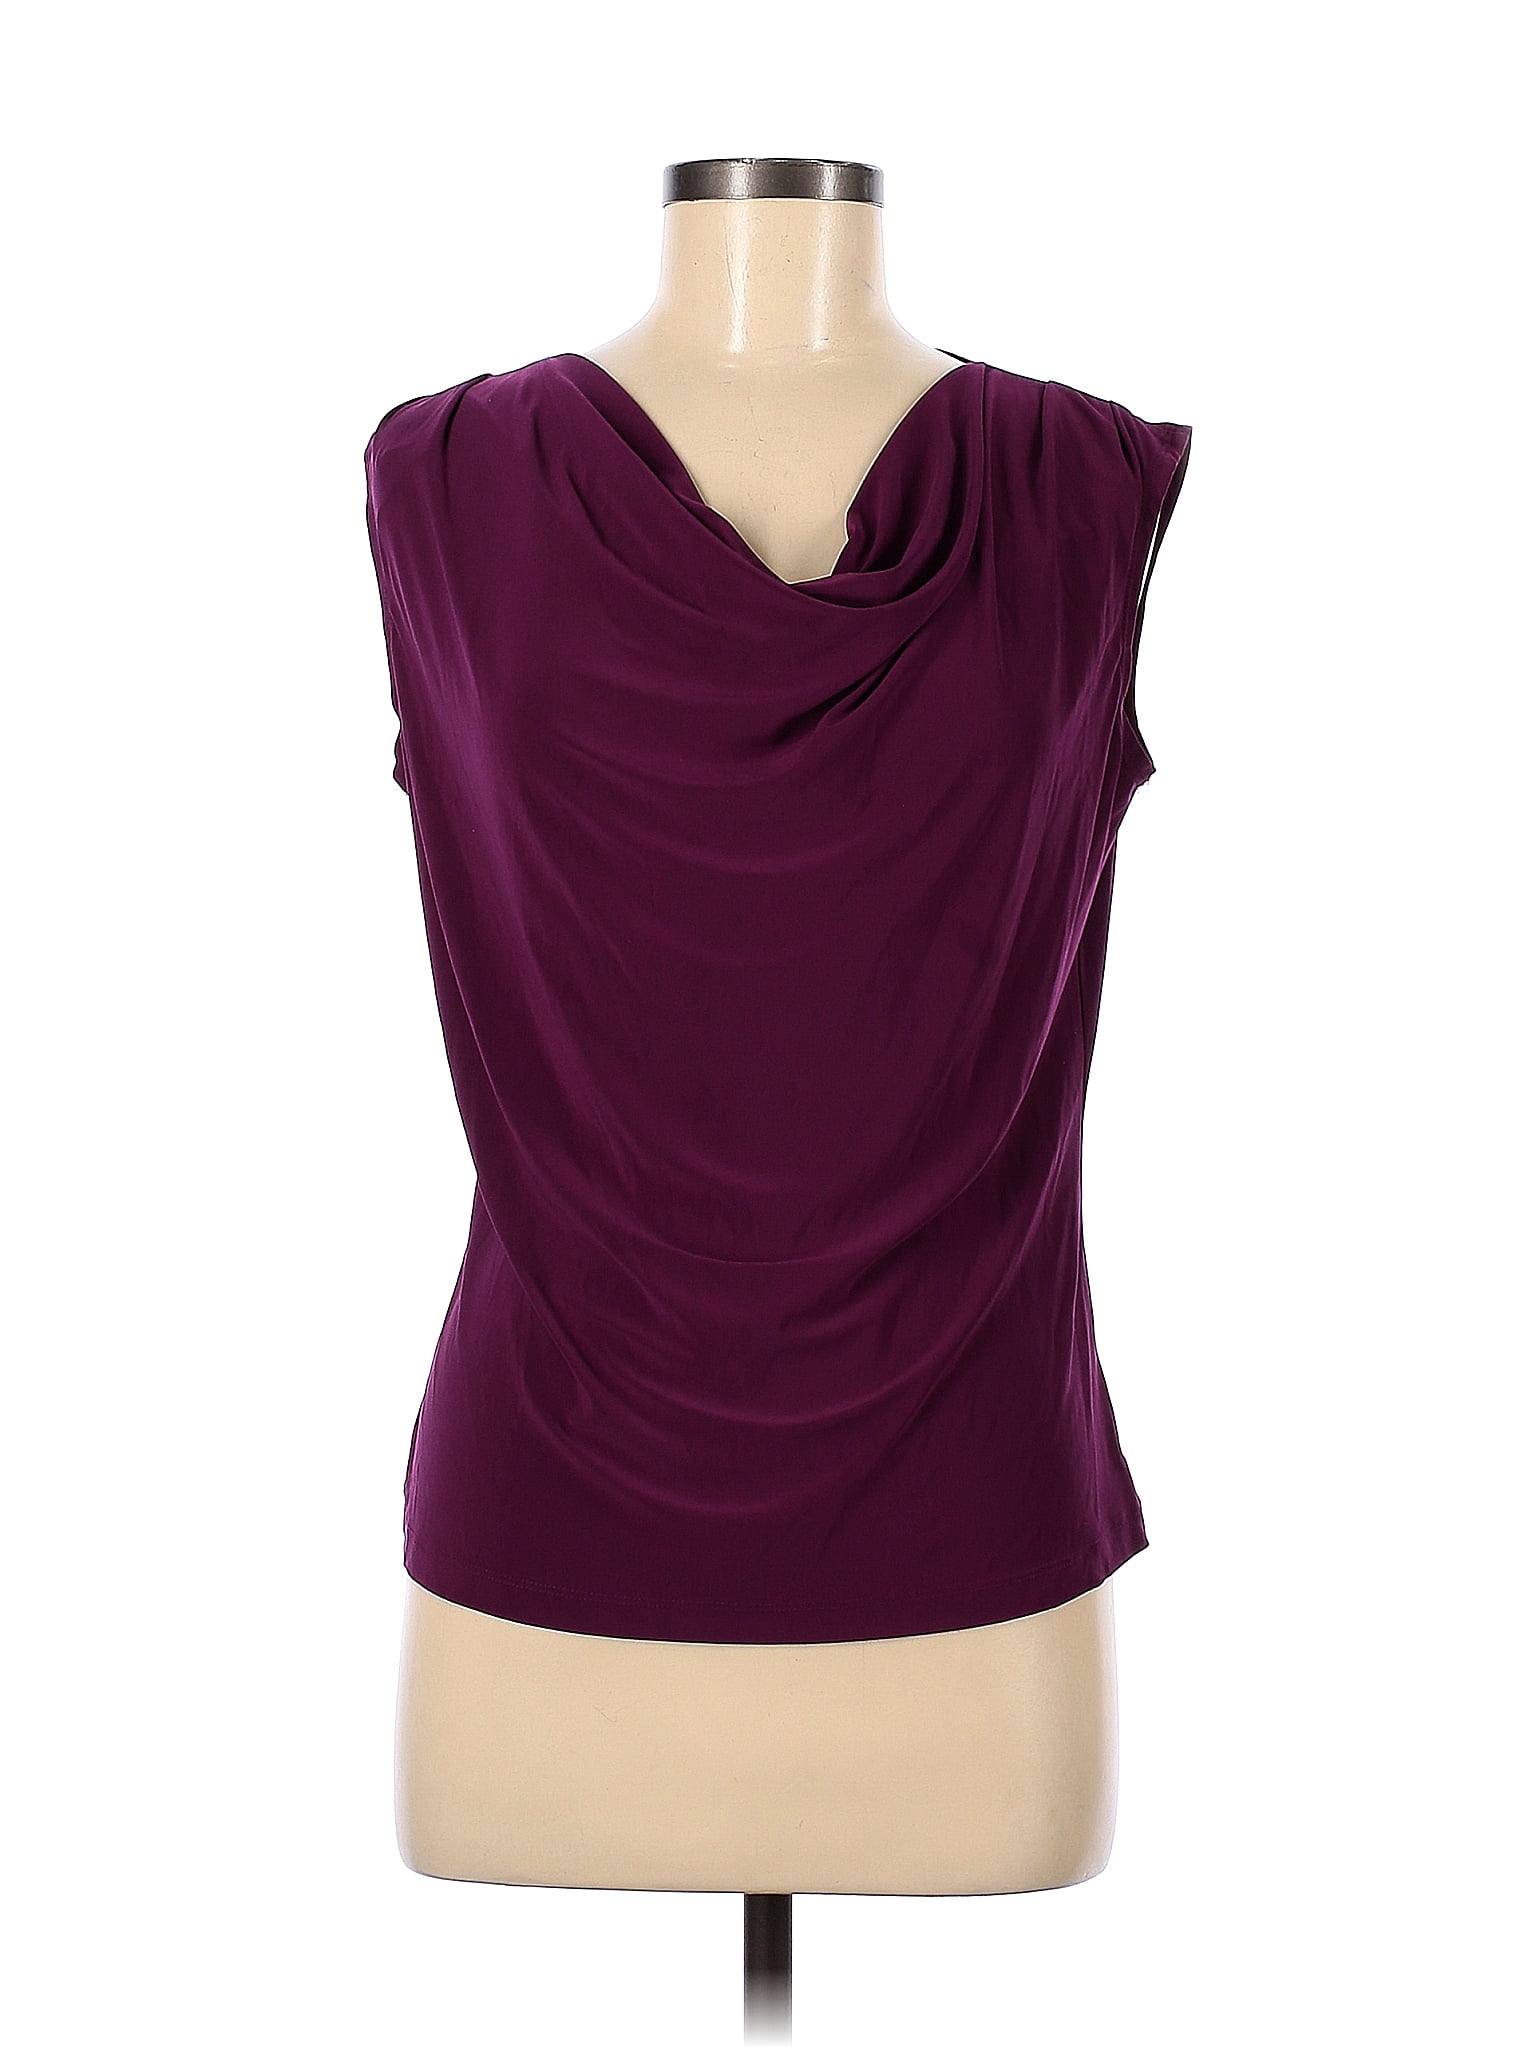 DressBarn Solid Purple Burgundy Sleeveless Top Size M - 52% off | thredUP